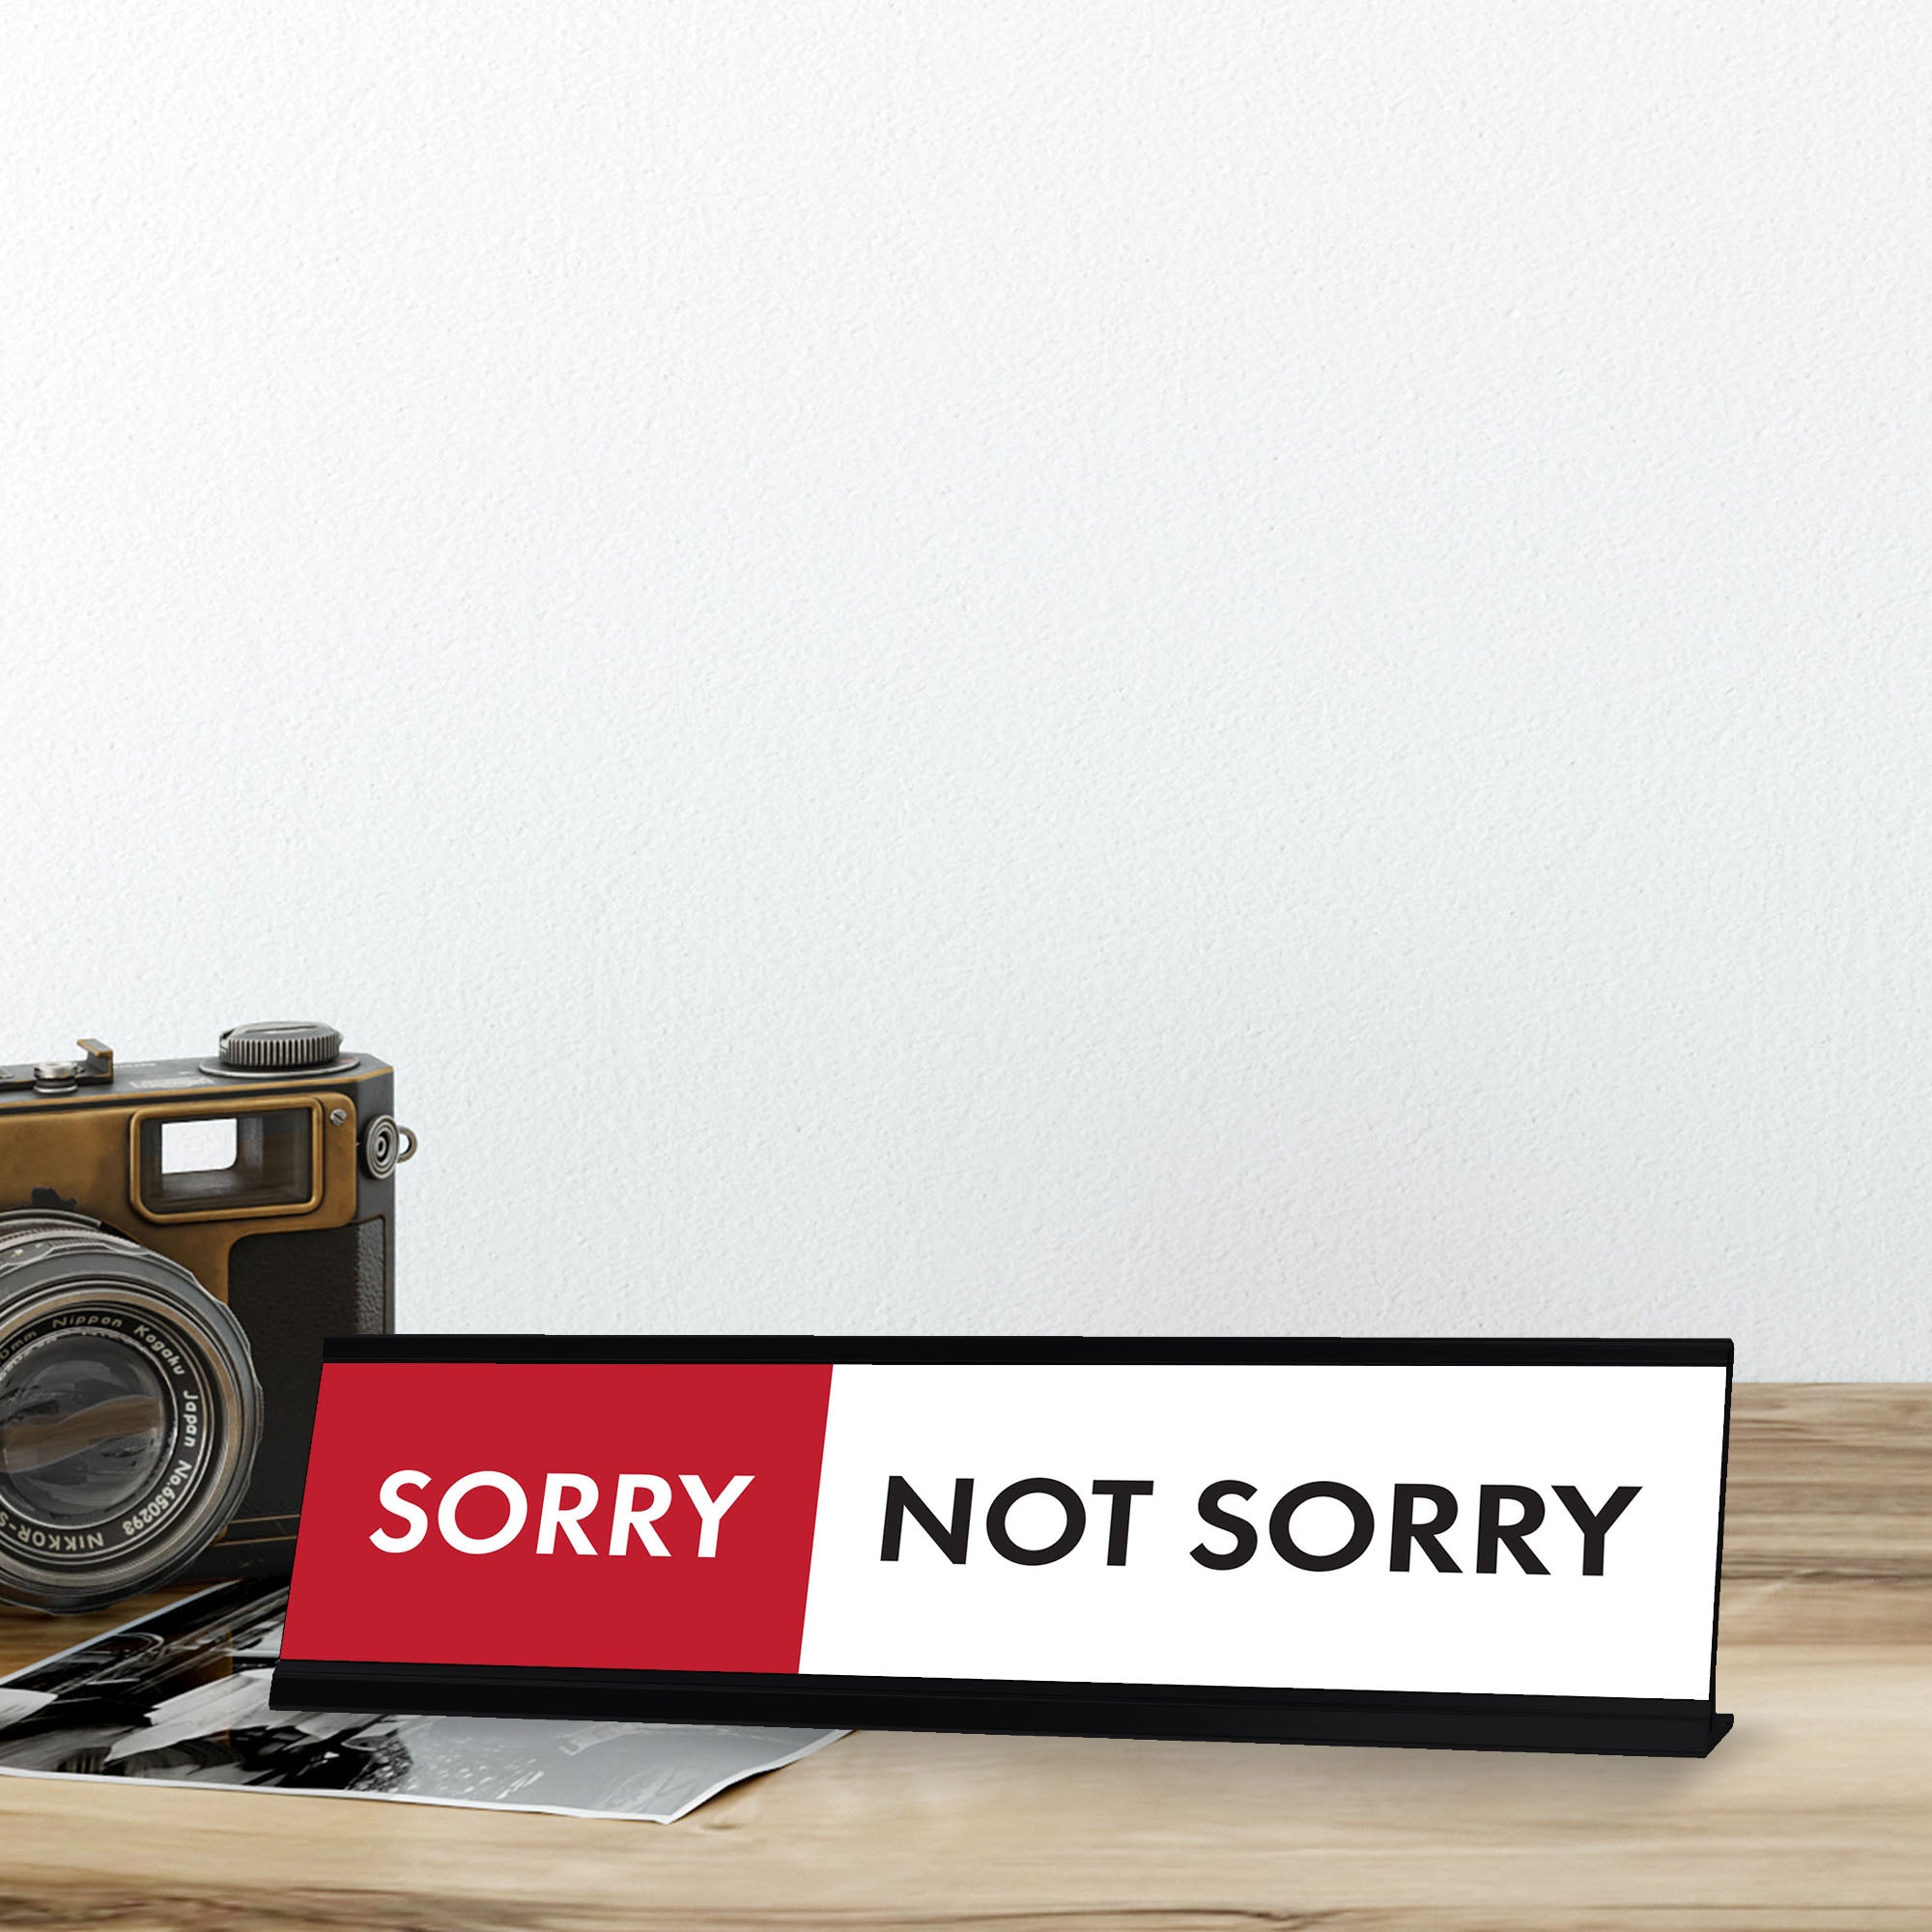 Sorry Not Sorry, Designer Series Desk Sign Novelty Nameplate (2 x 8")